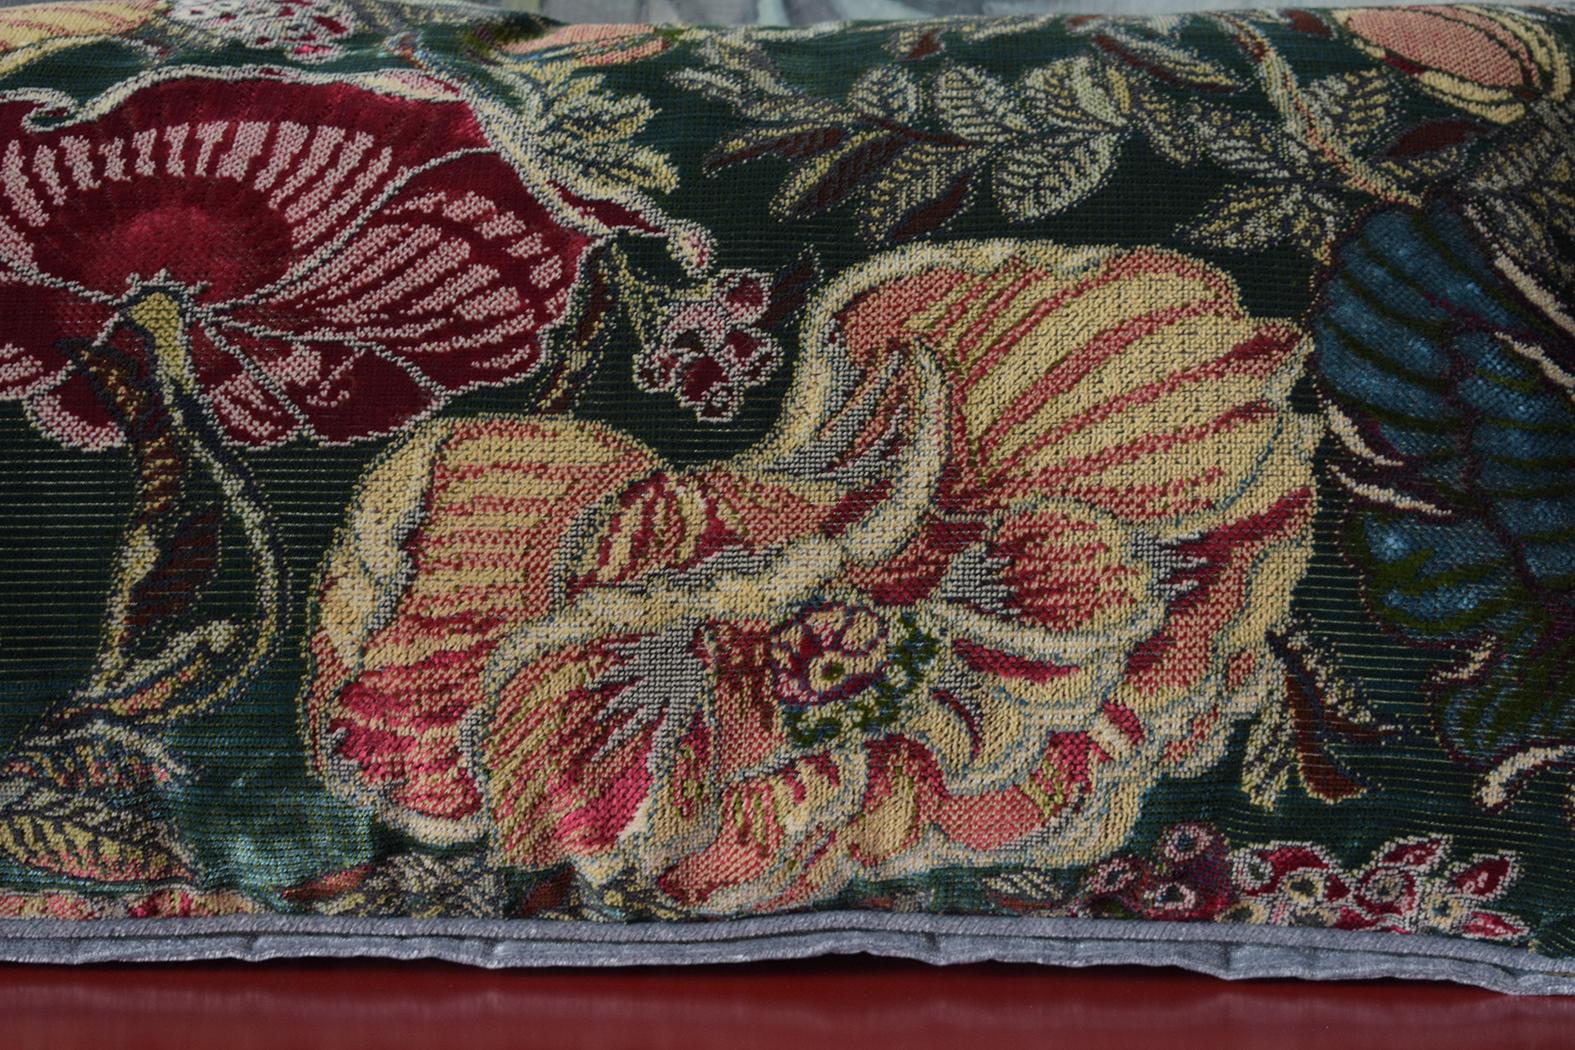 Baroque 1910s Vintage Botanical Velvet Pillows: Charm & Comfort for Any Home For Sale